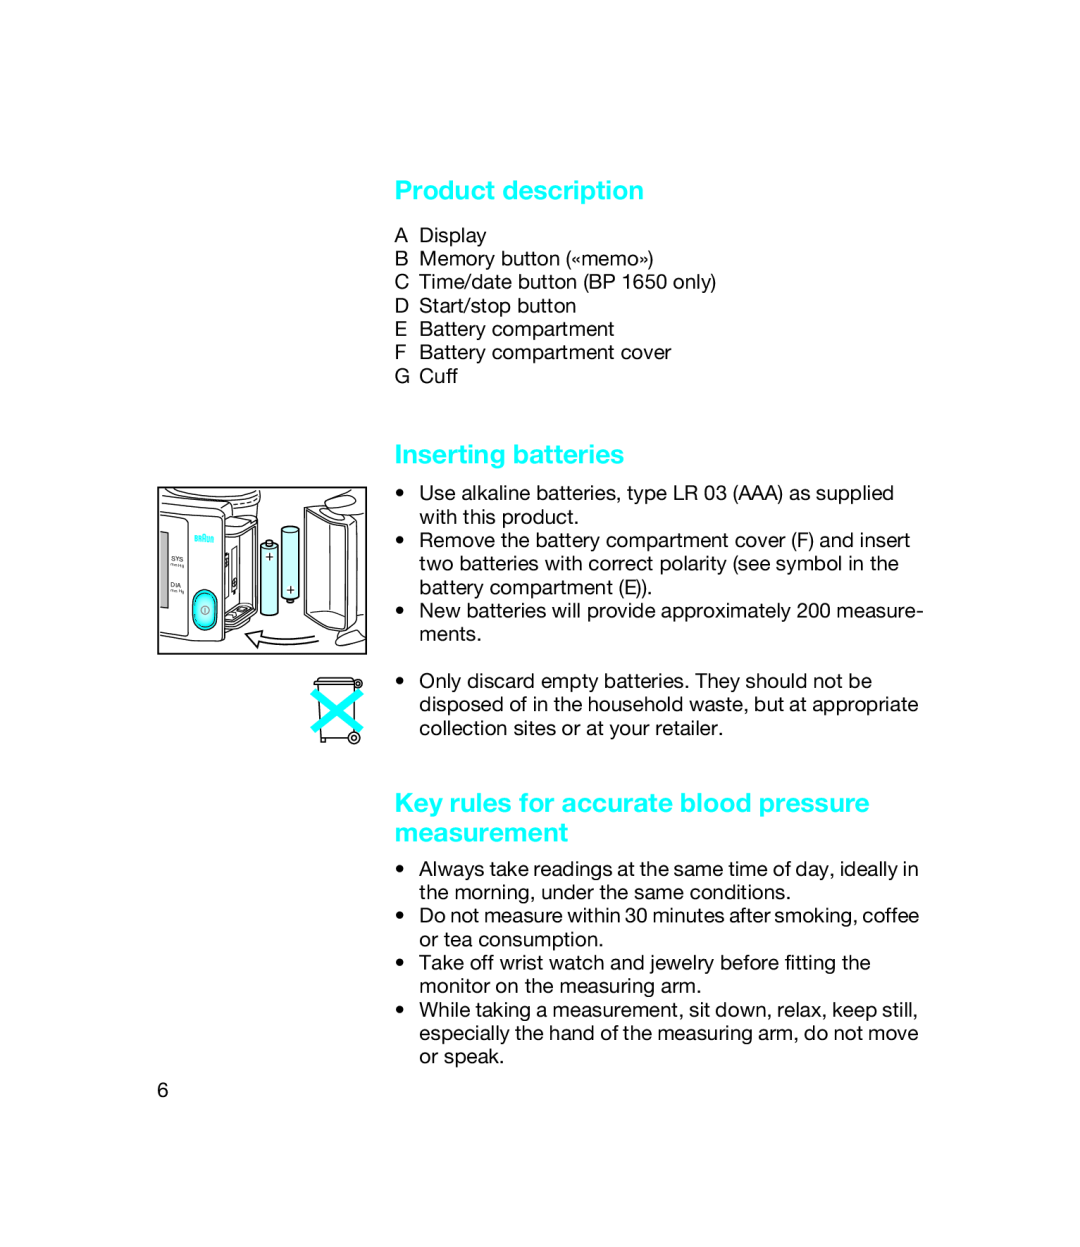 Braun bp1600, BP 1650 manual Product description, Inserting batteries, Key rules for accurate blood pressure measurement 